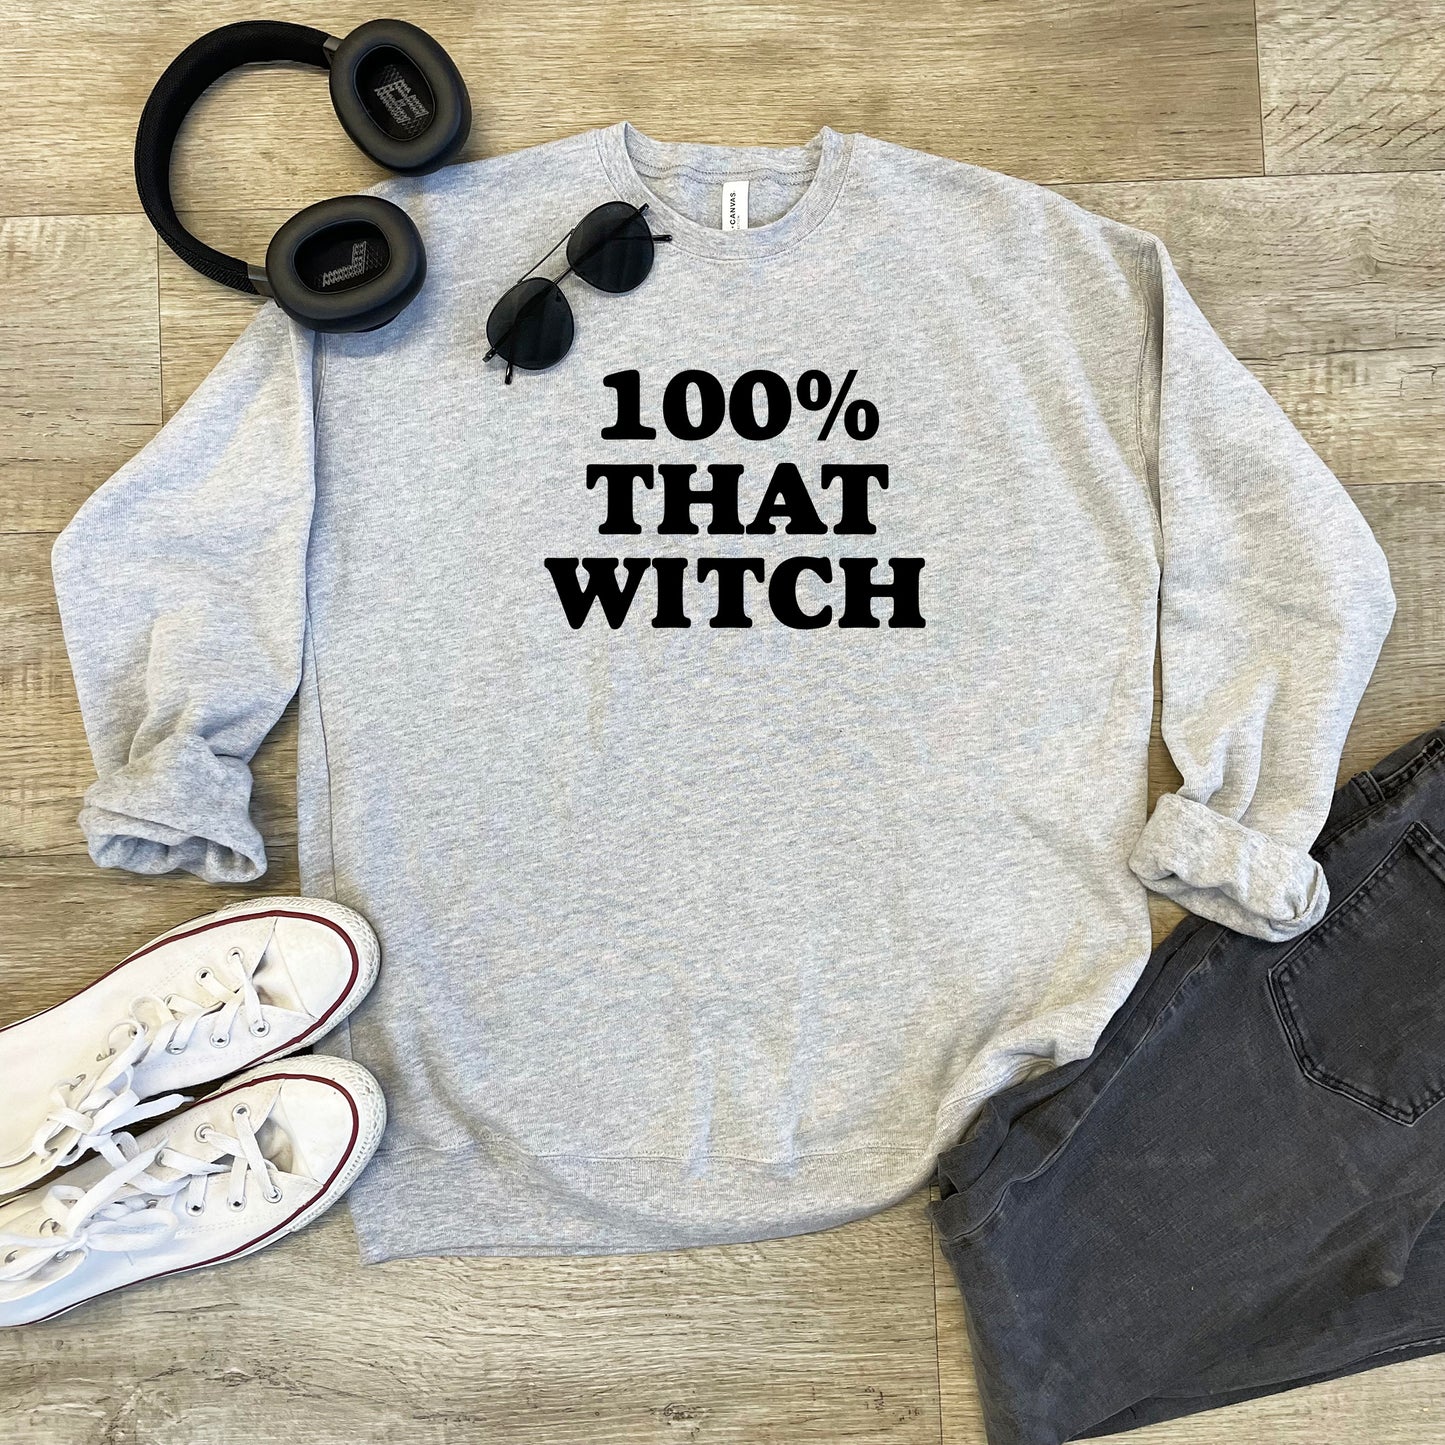 100% That Witch - Unisex Sweatshirt - Dusty Blue or Athletic Heather